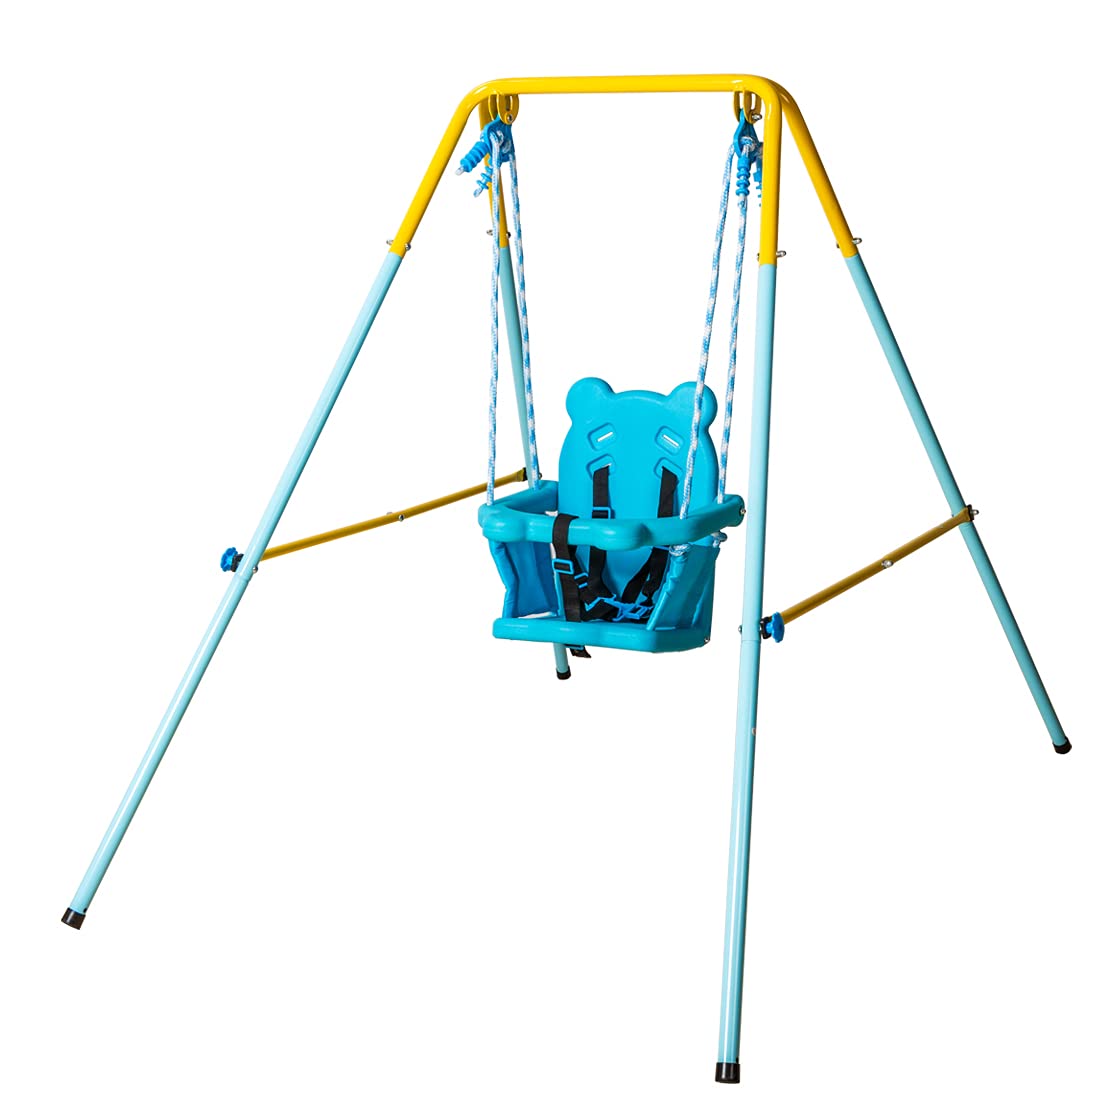 Folding Swing Outdoor Indoor Swing Portable Swing,Kids Swing with Safety Chair Set,Nursery Swing